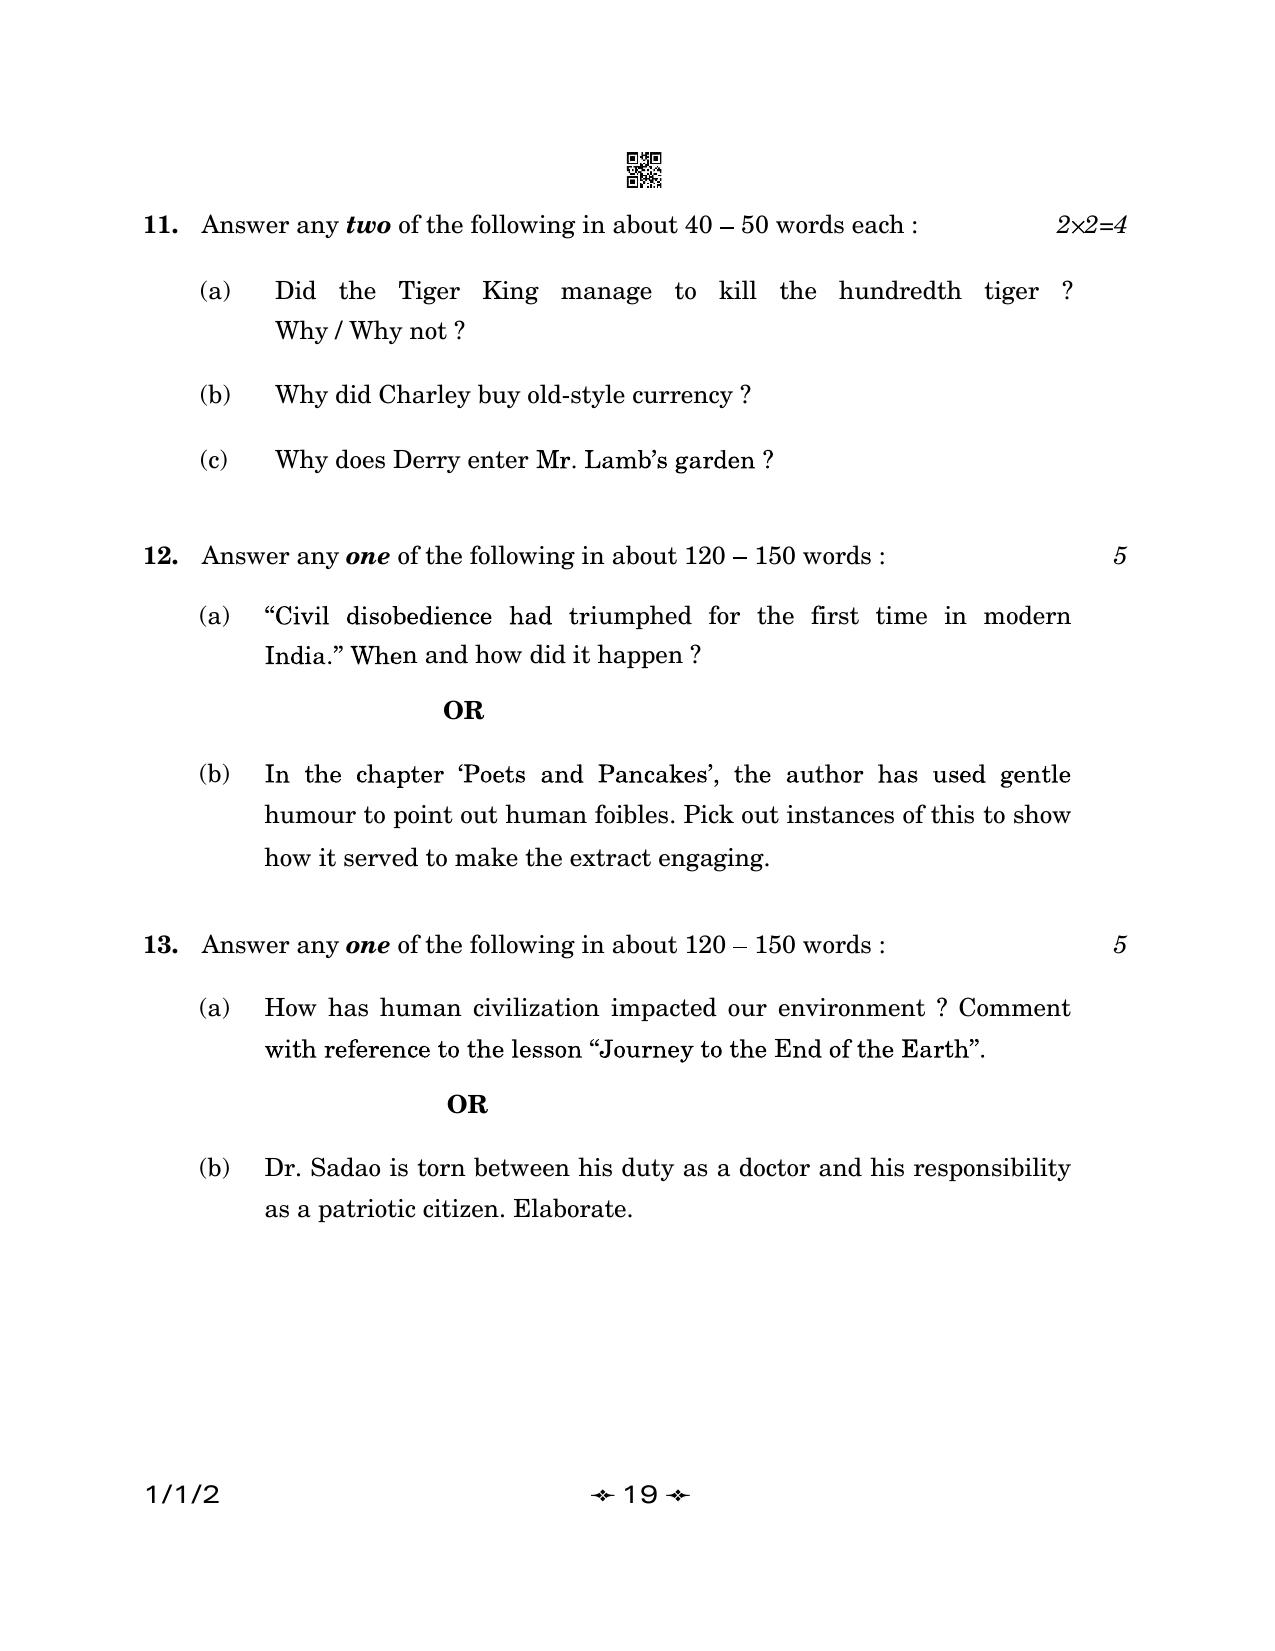 CBSE Class 12 1-1-2 English Core 2023 Question Paper - Page 19